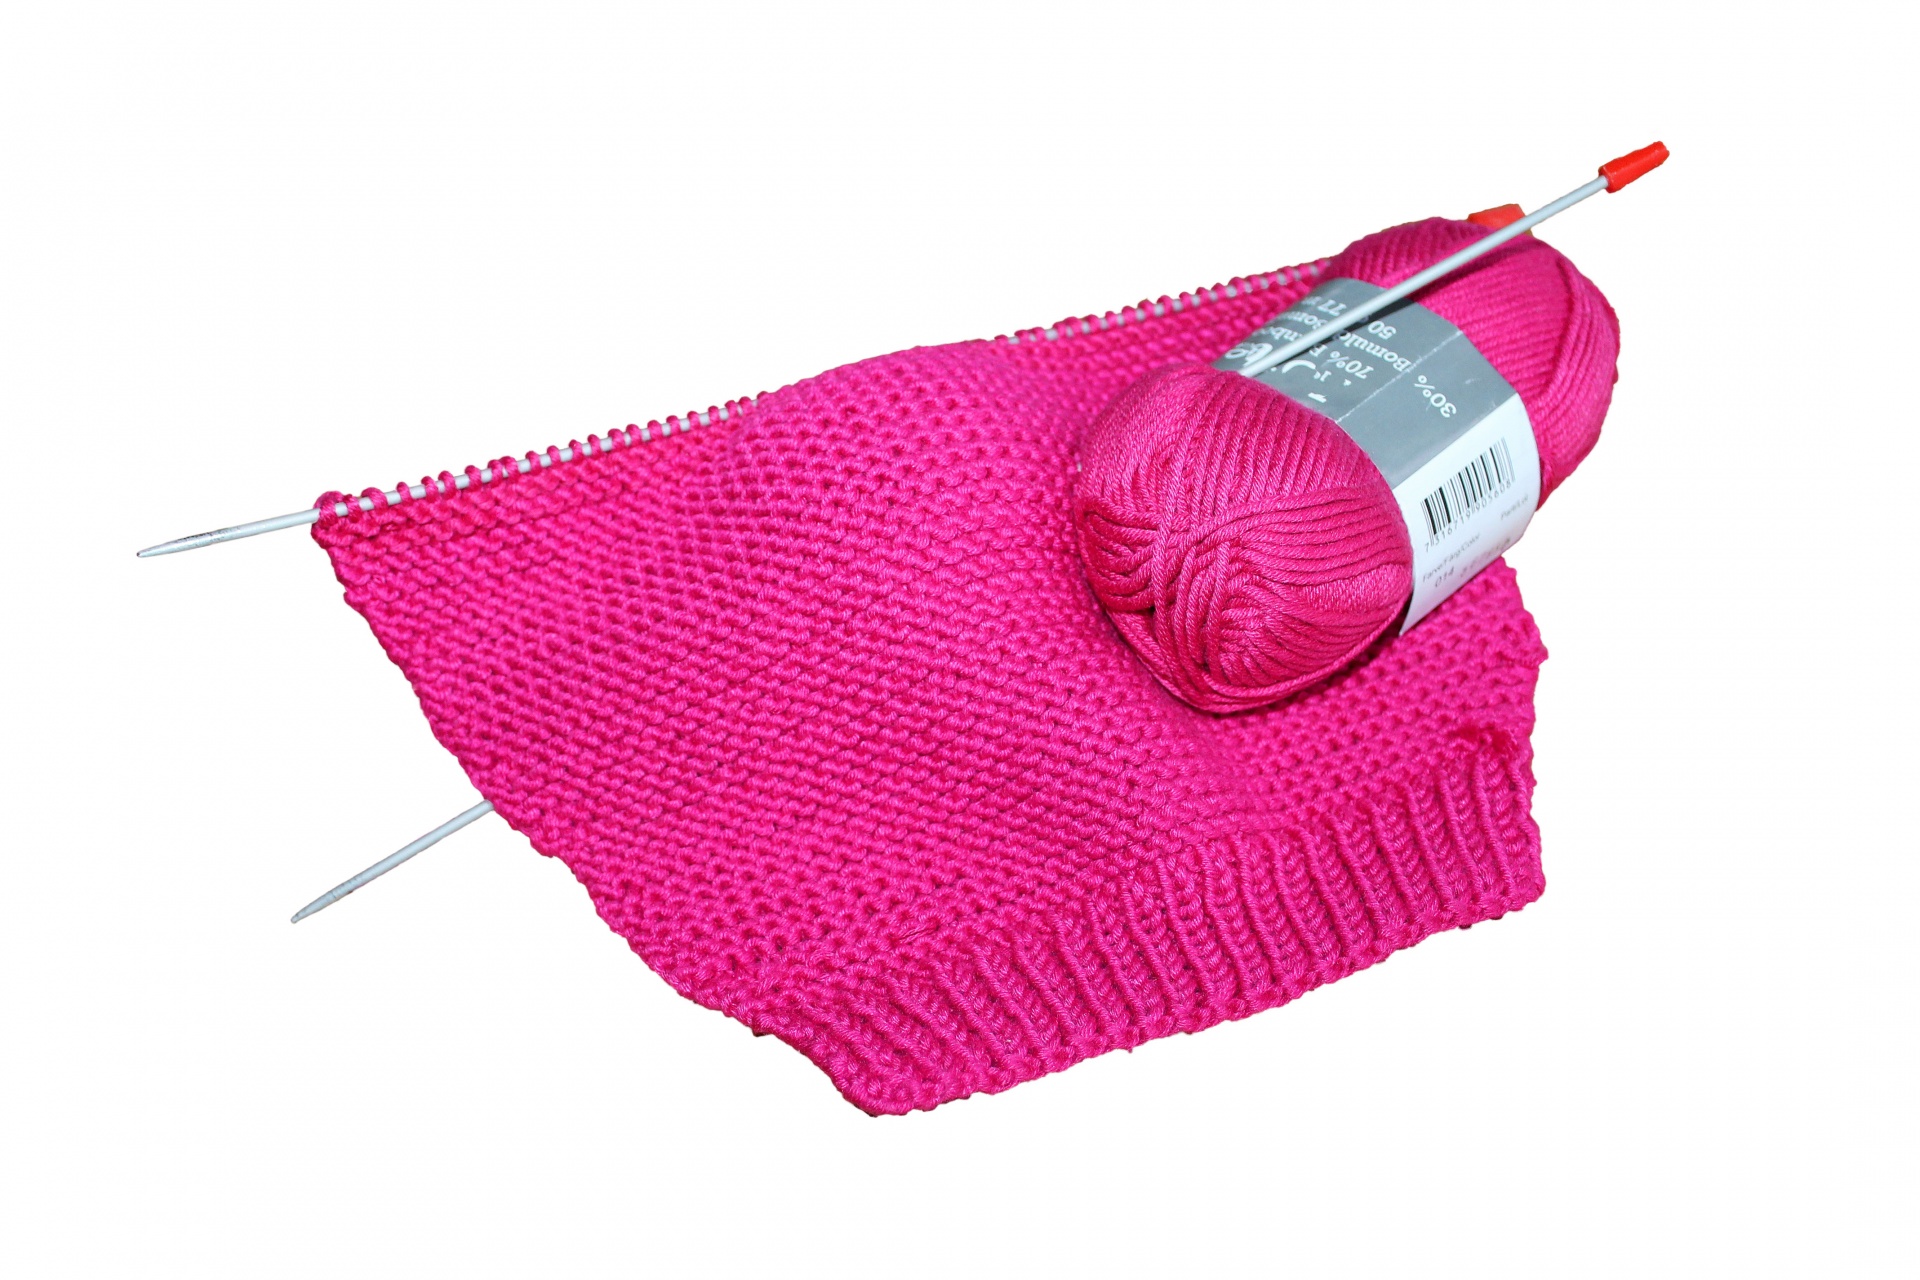 knitting needles yarn free photo